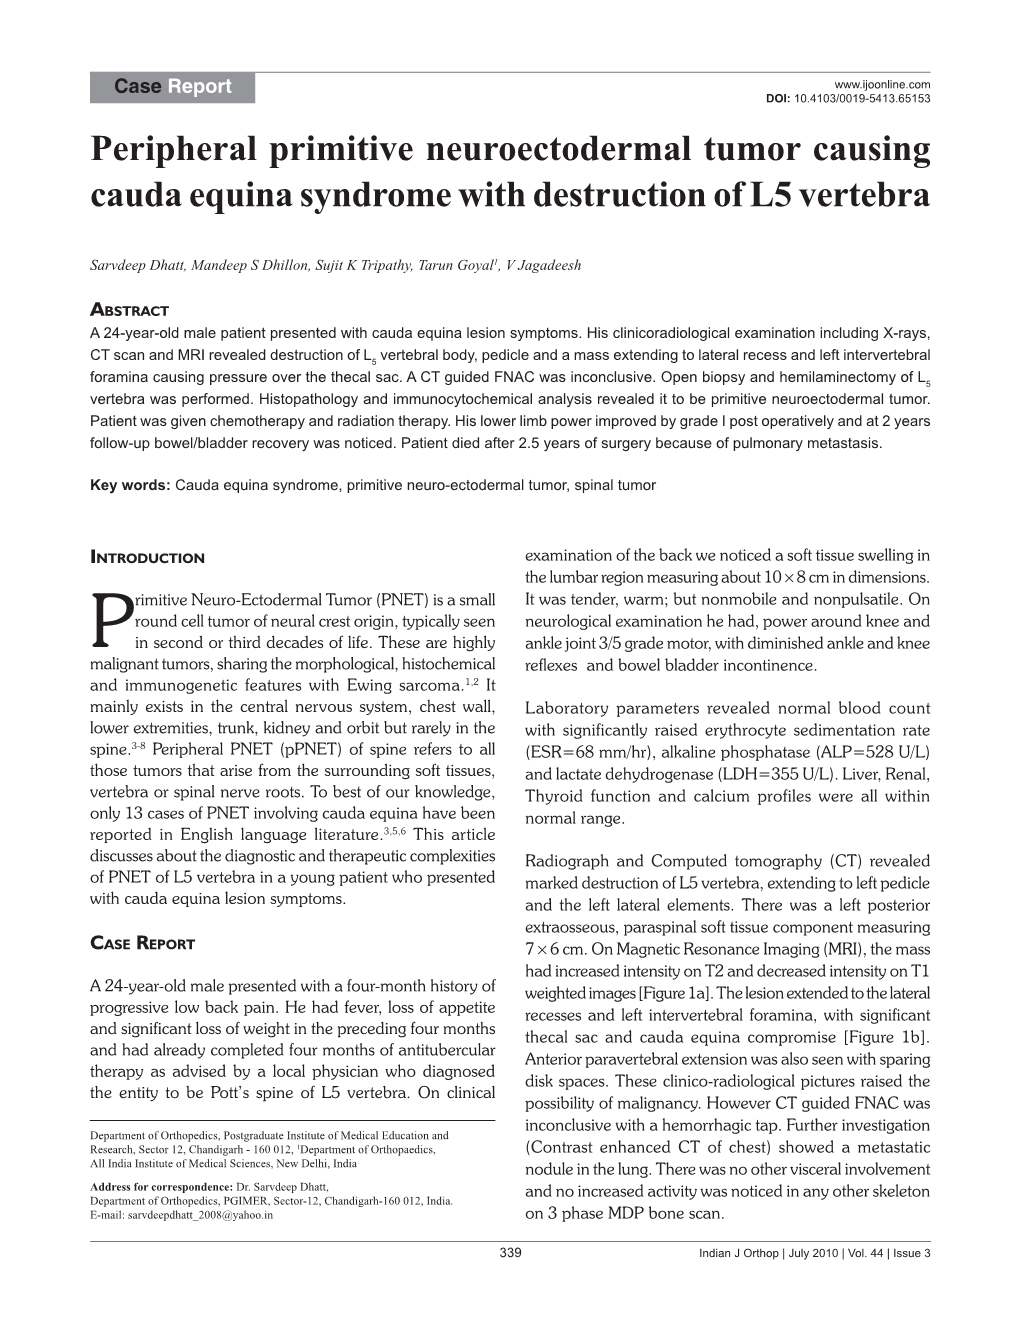 Peripheral Primitive Neuroectodermal Tumor Causing Cauda Equina Syndrome with Destruction of L5 Vertebra